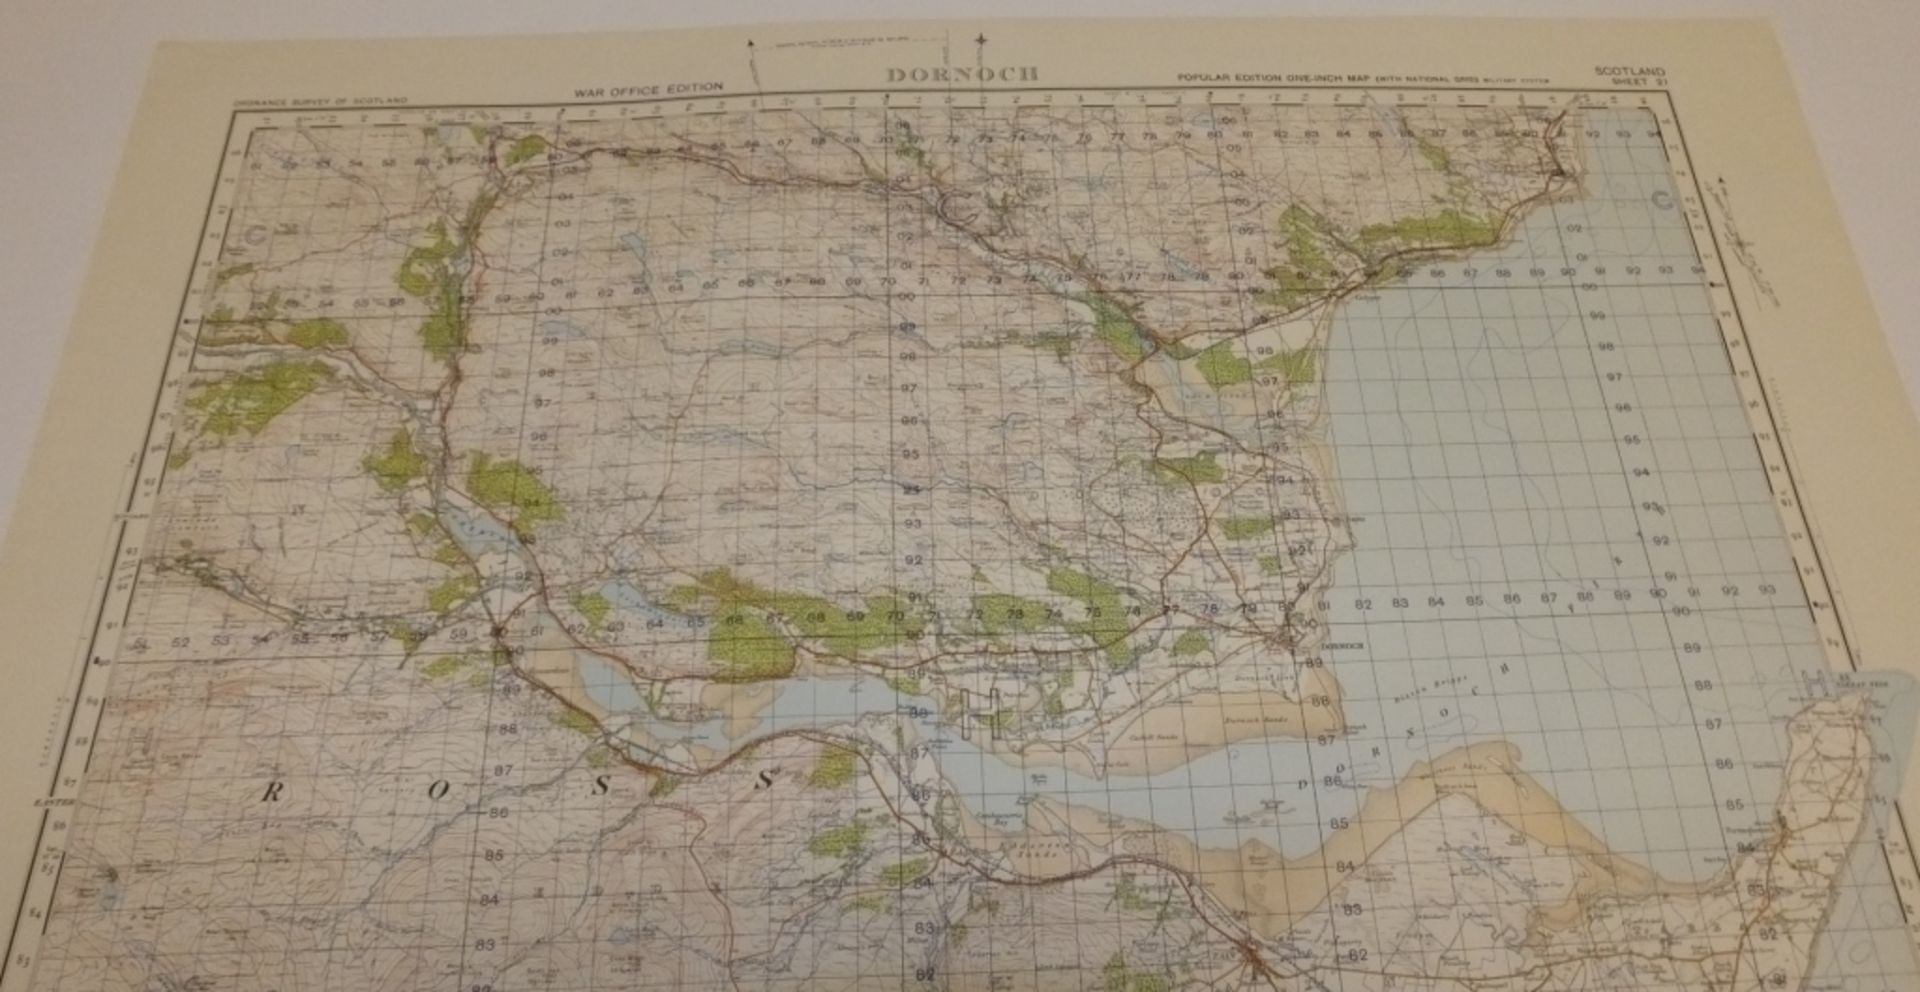 29x SCOTLAND MAP DORNOCH 1INCH 1MILE 1949 POPULAR EDITION 4639GSGS SHEET 21 - Image 2 of 3